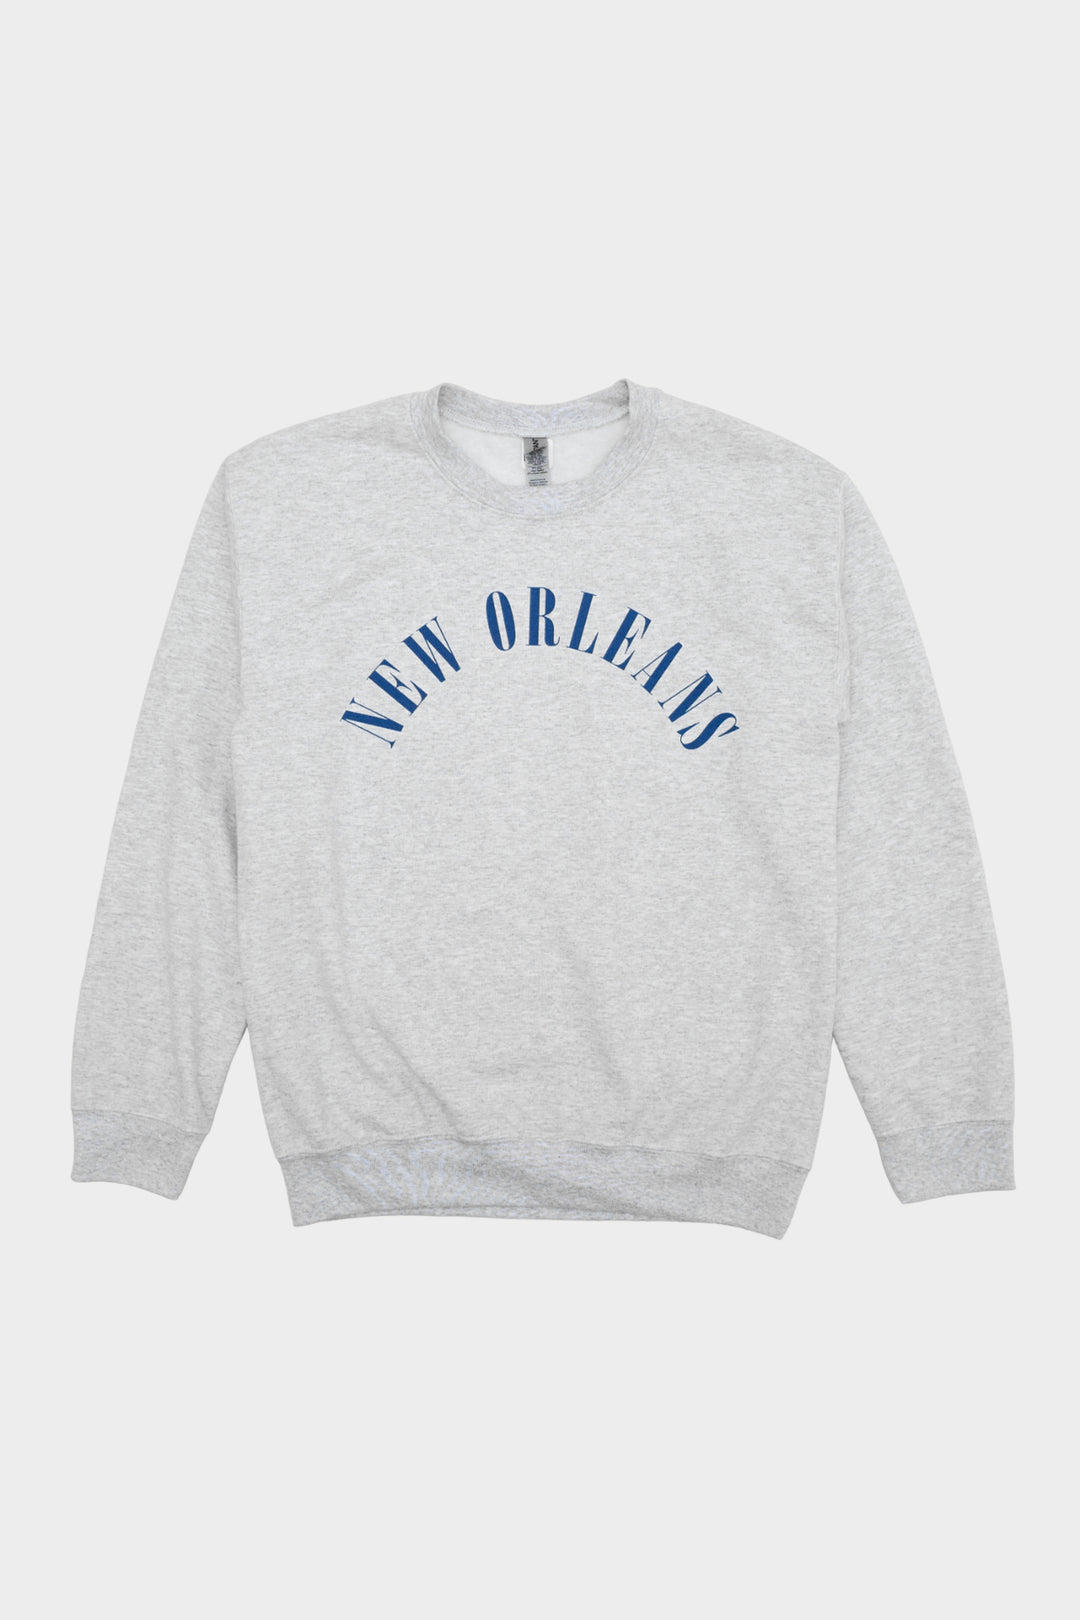 New Orleans 92 Sweatshirt